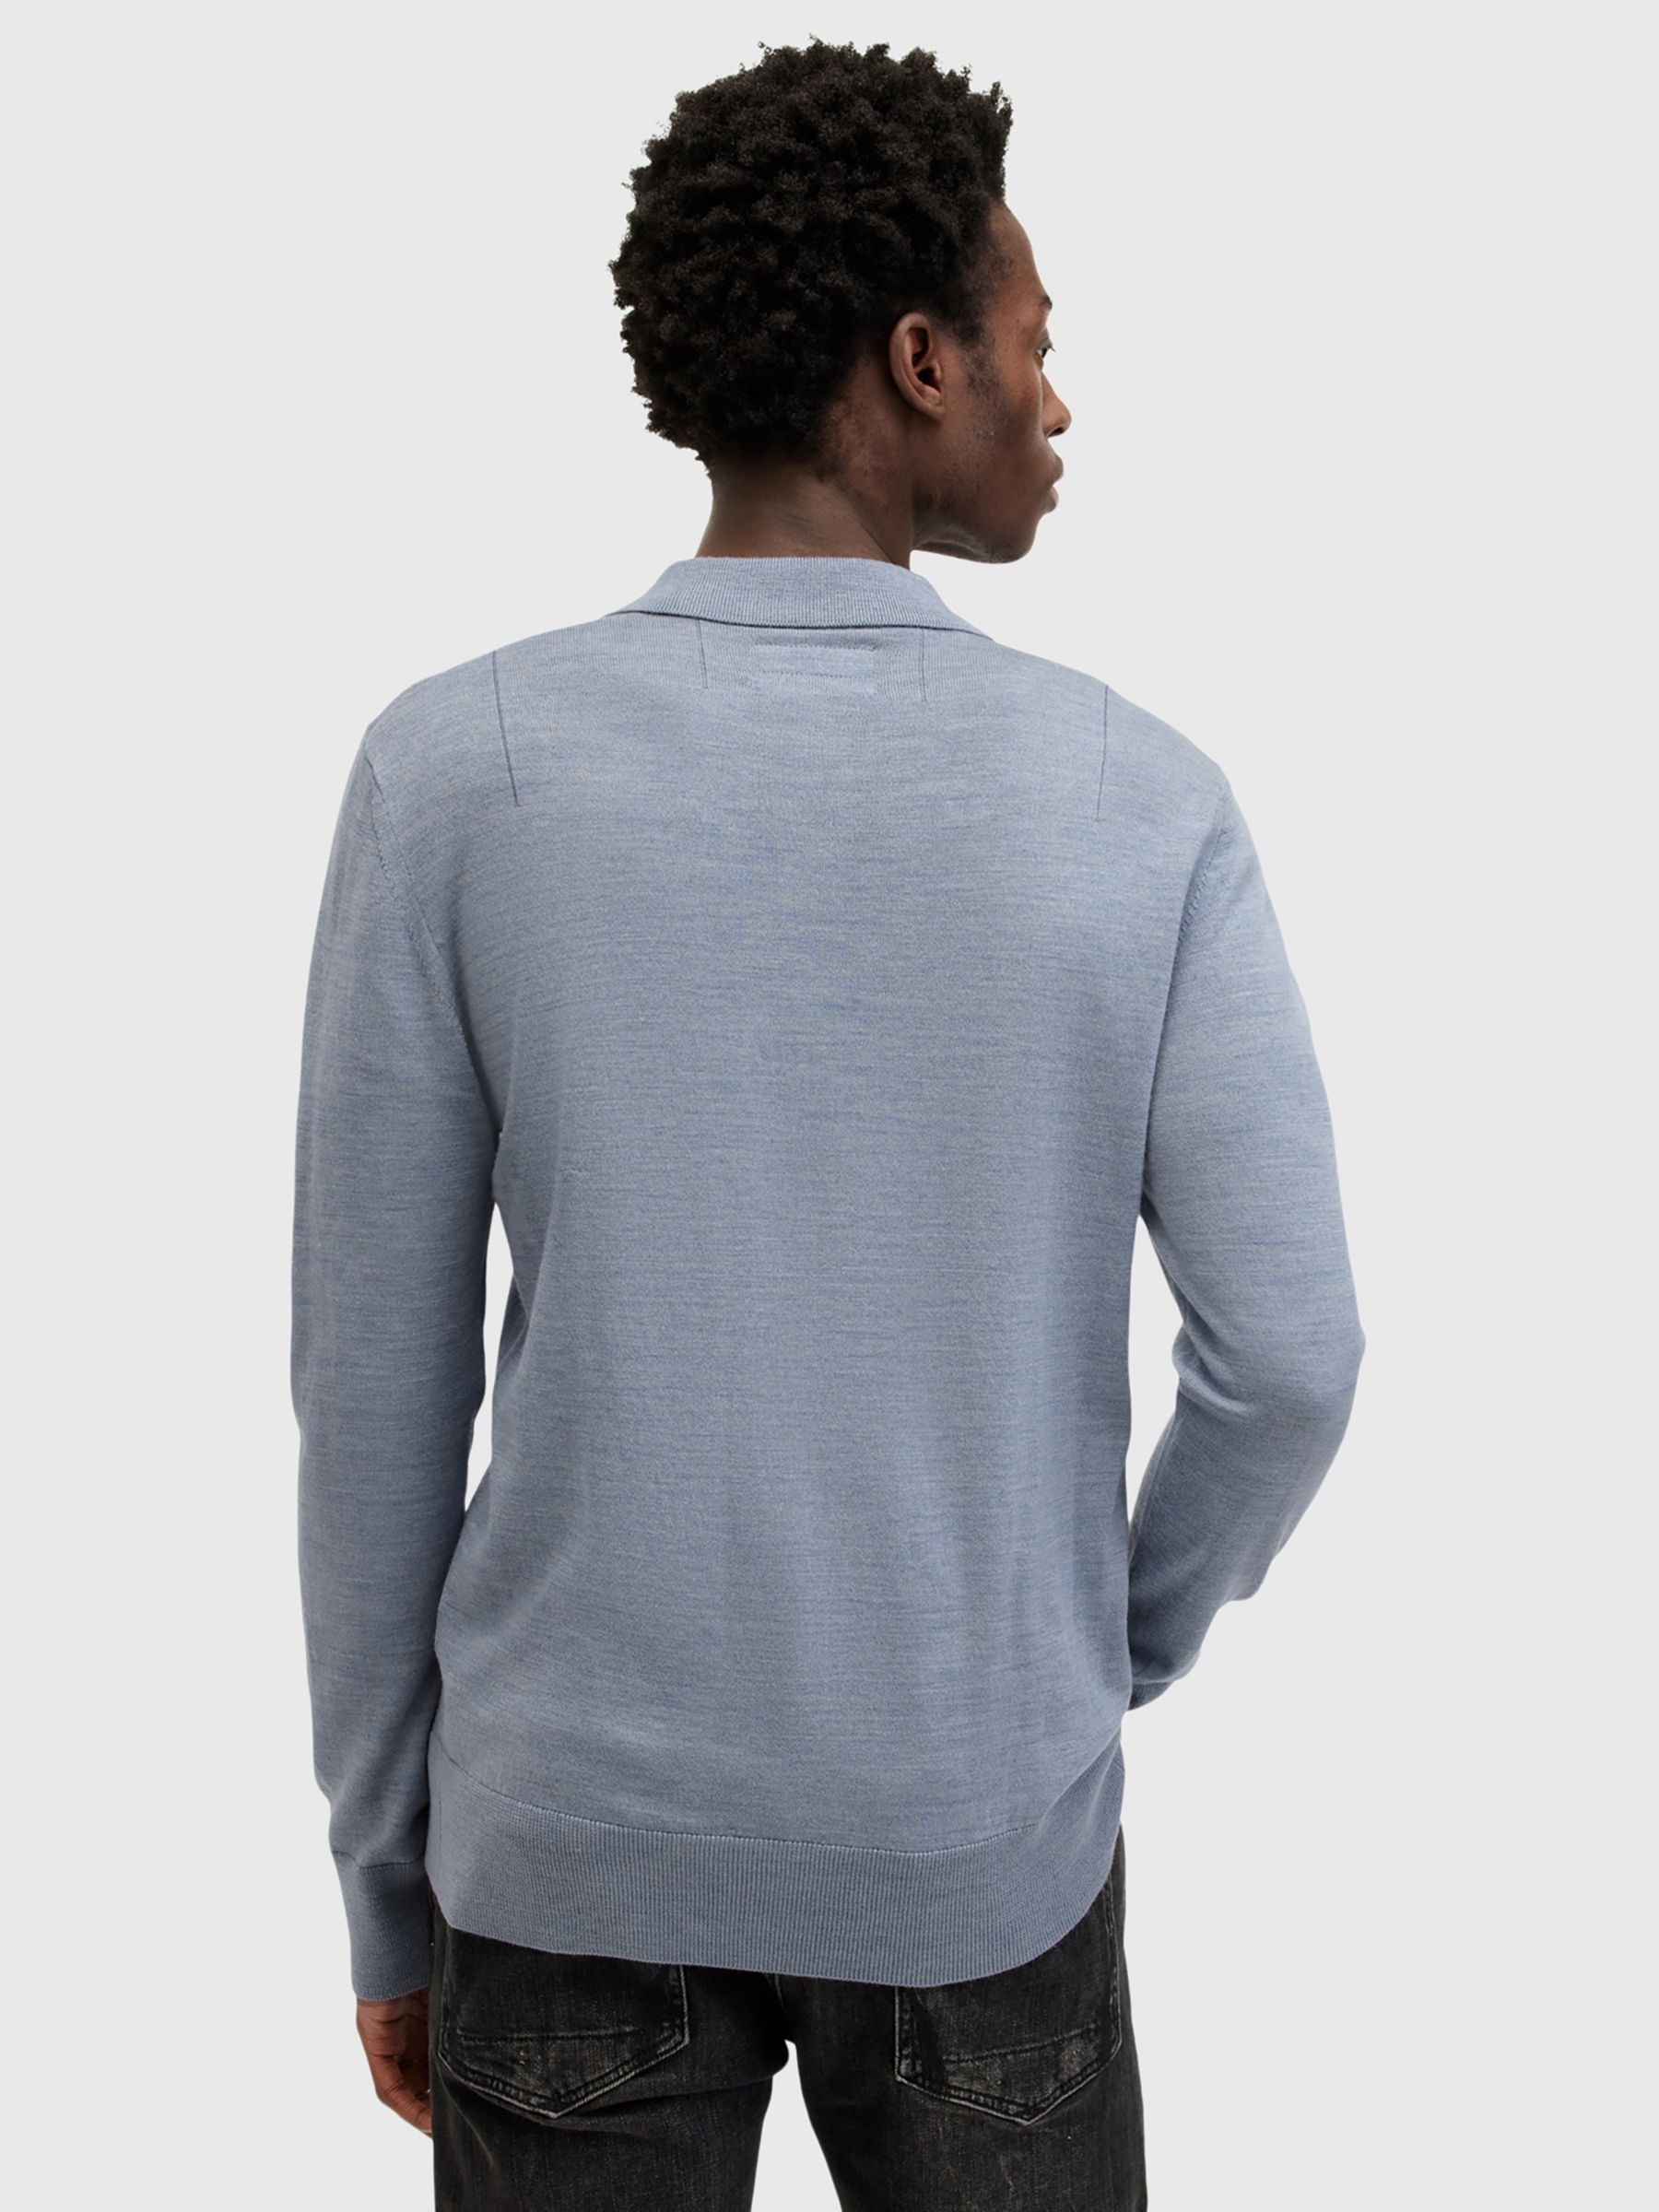 AllSaints Mode Merino Regular Fit Long Sleeve Polo Shirt, Dusty Blue, XXL